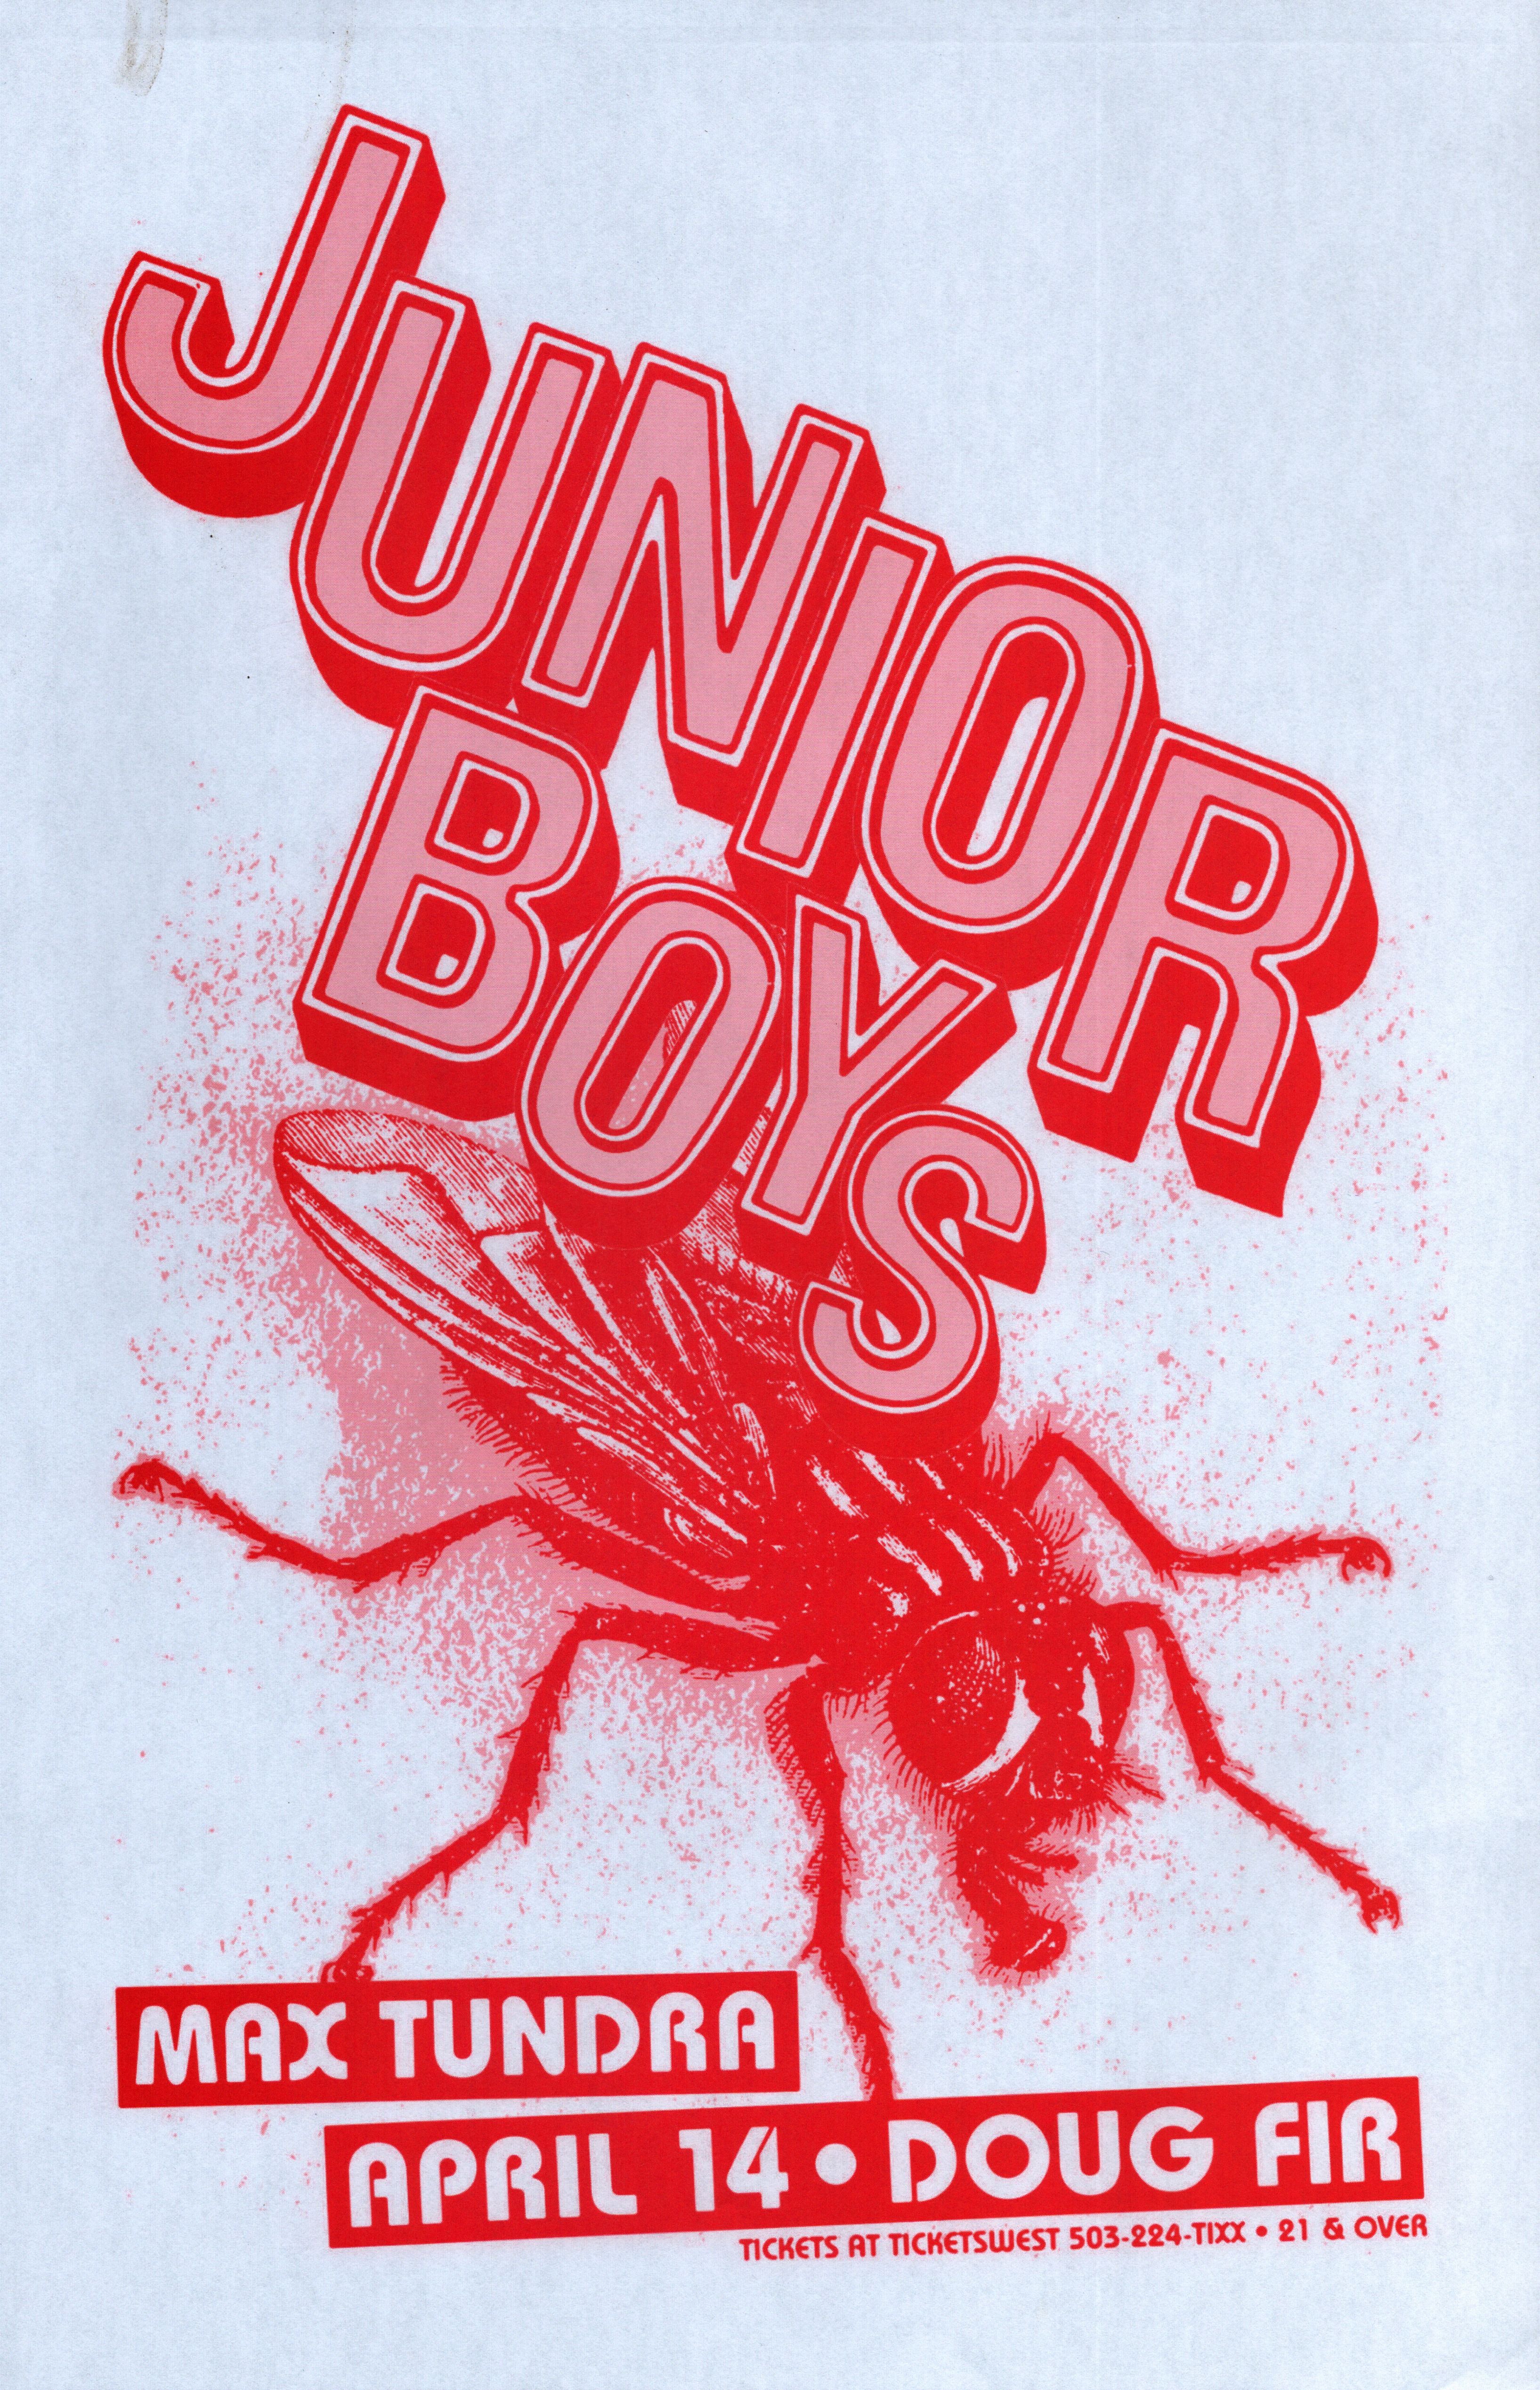 MXP-144.5 Junior Boys 2009 Doug Fir  Apr 14 Concert Poster